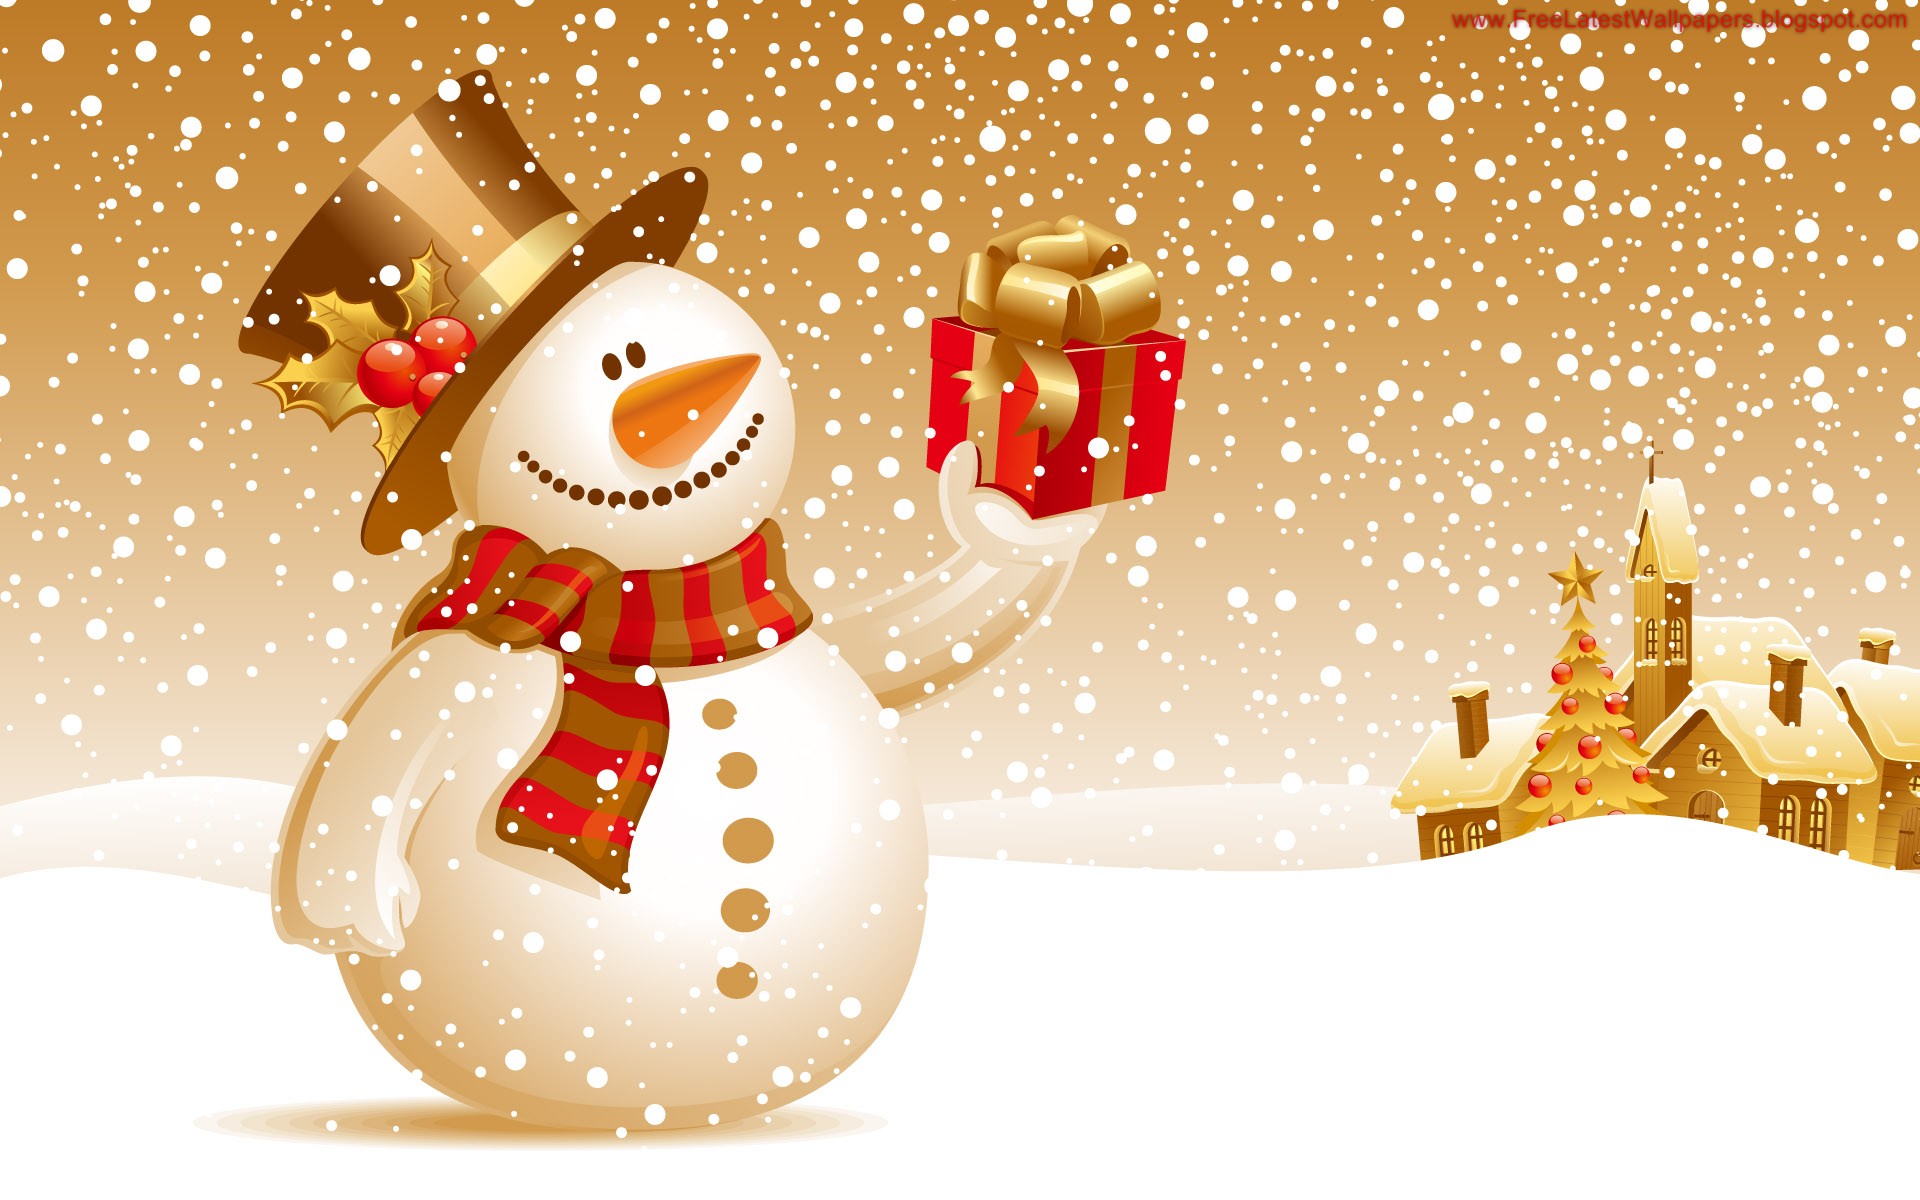 Download Festive Snowman Wallpaper HD wallpaper for free.